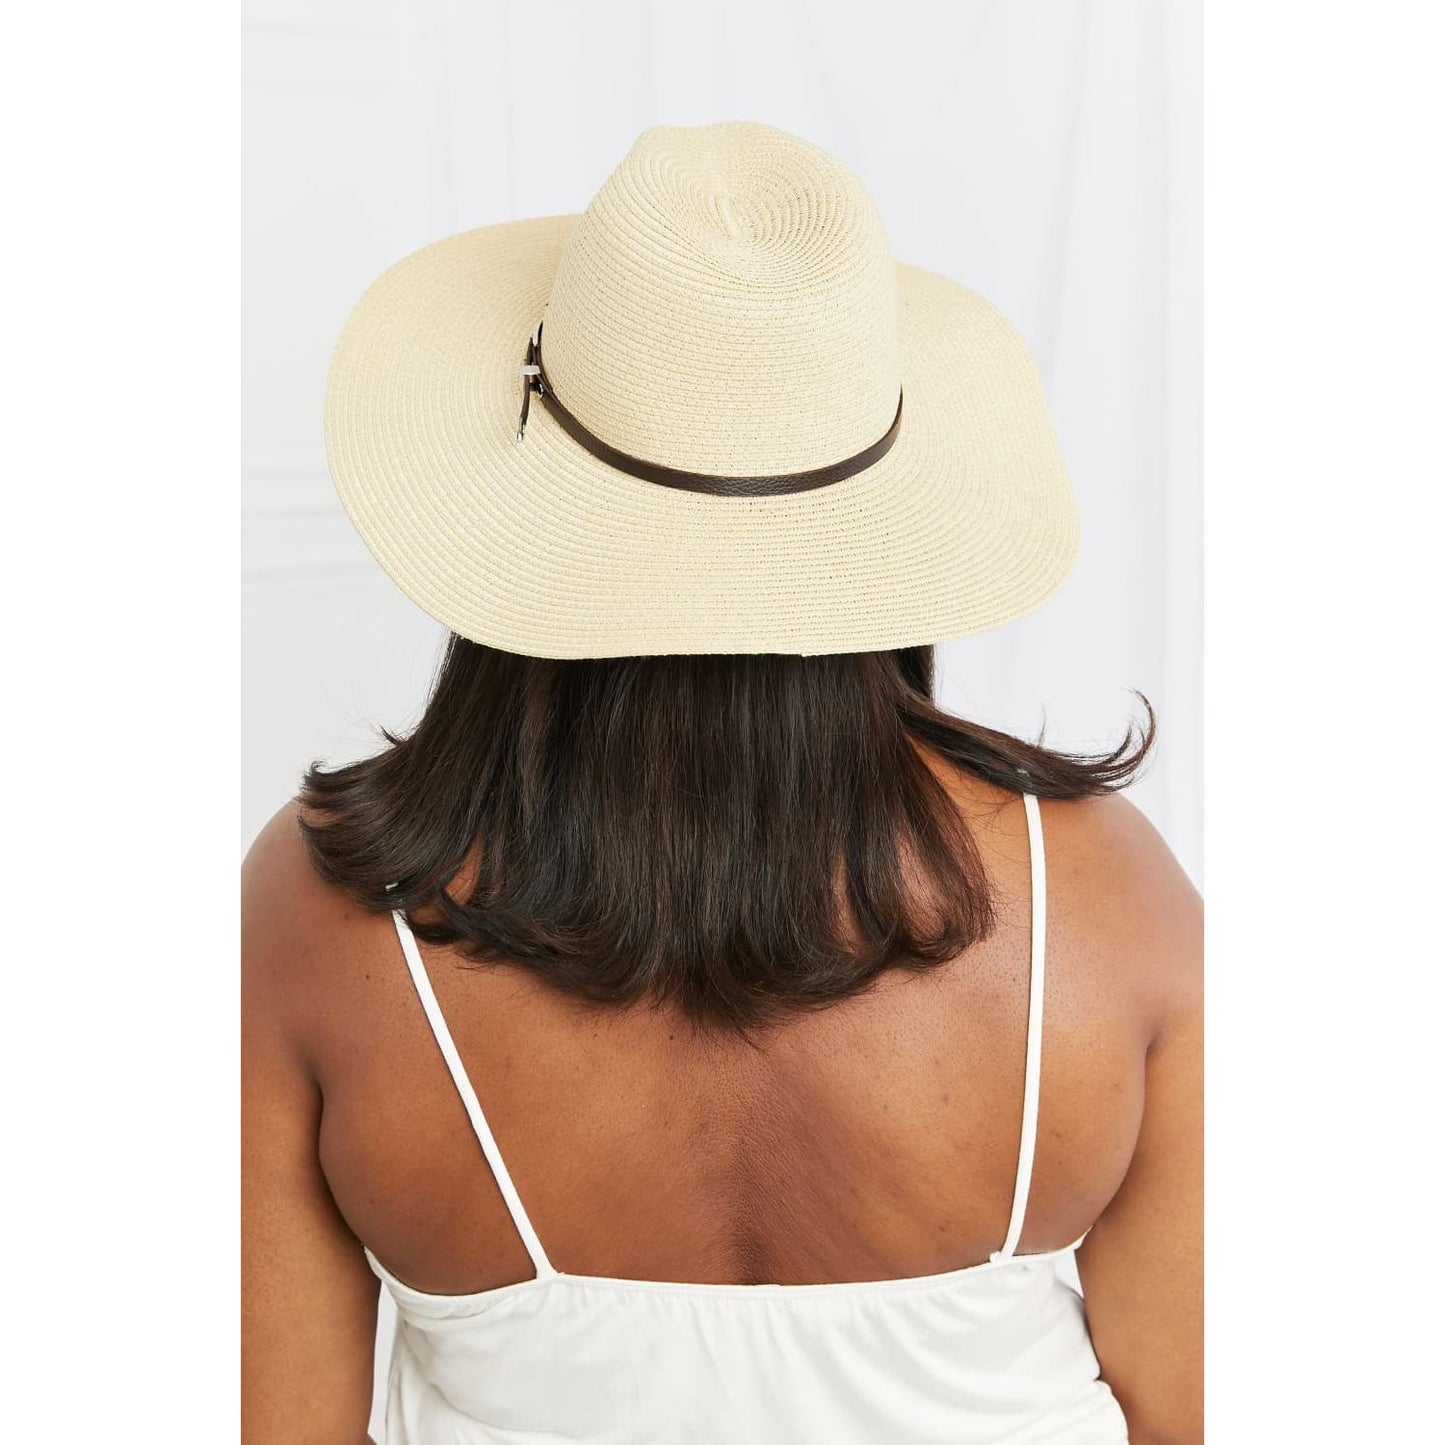 Fame Boho Summer Straw Fedora Hat - TiffanyzKlozet